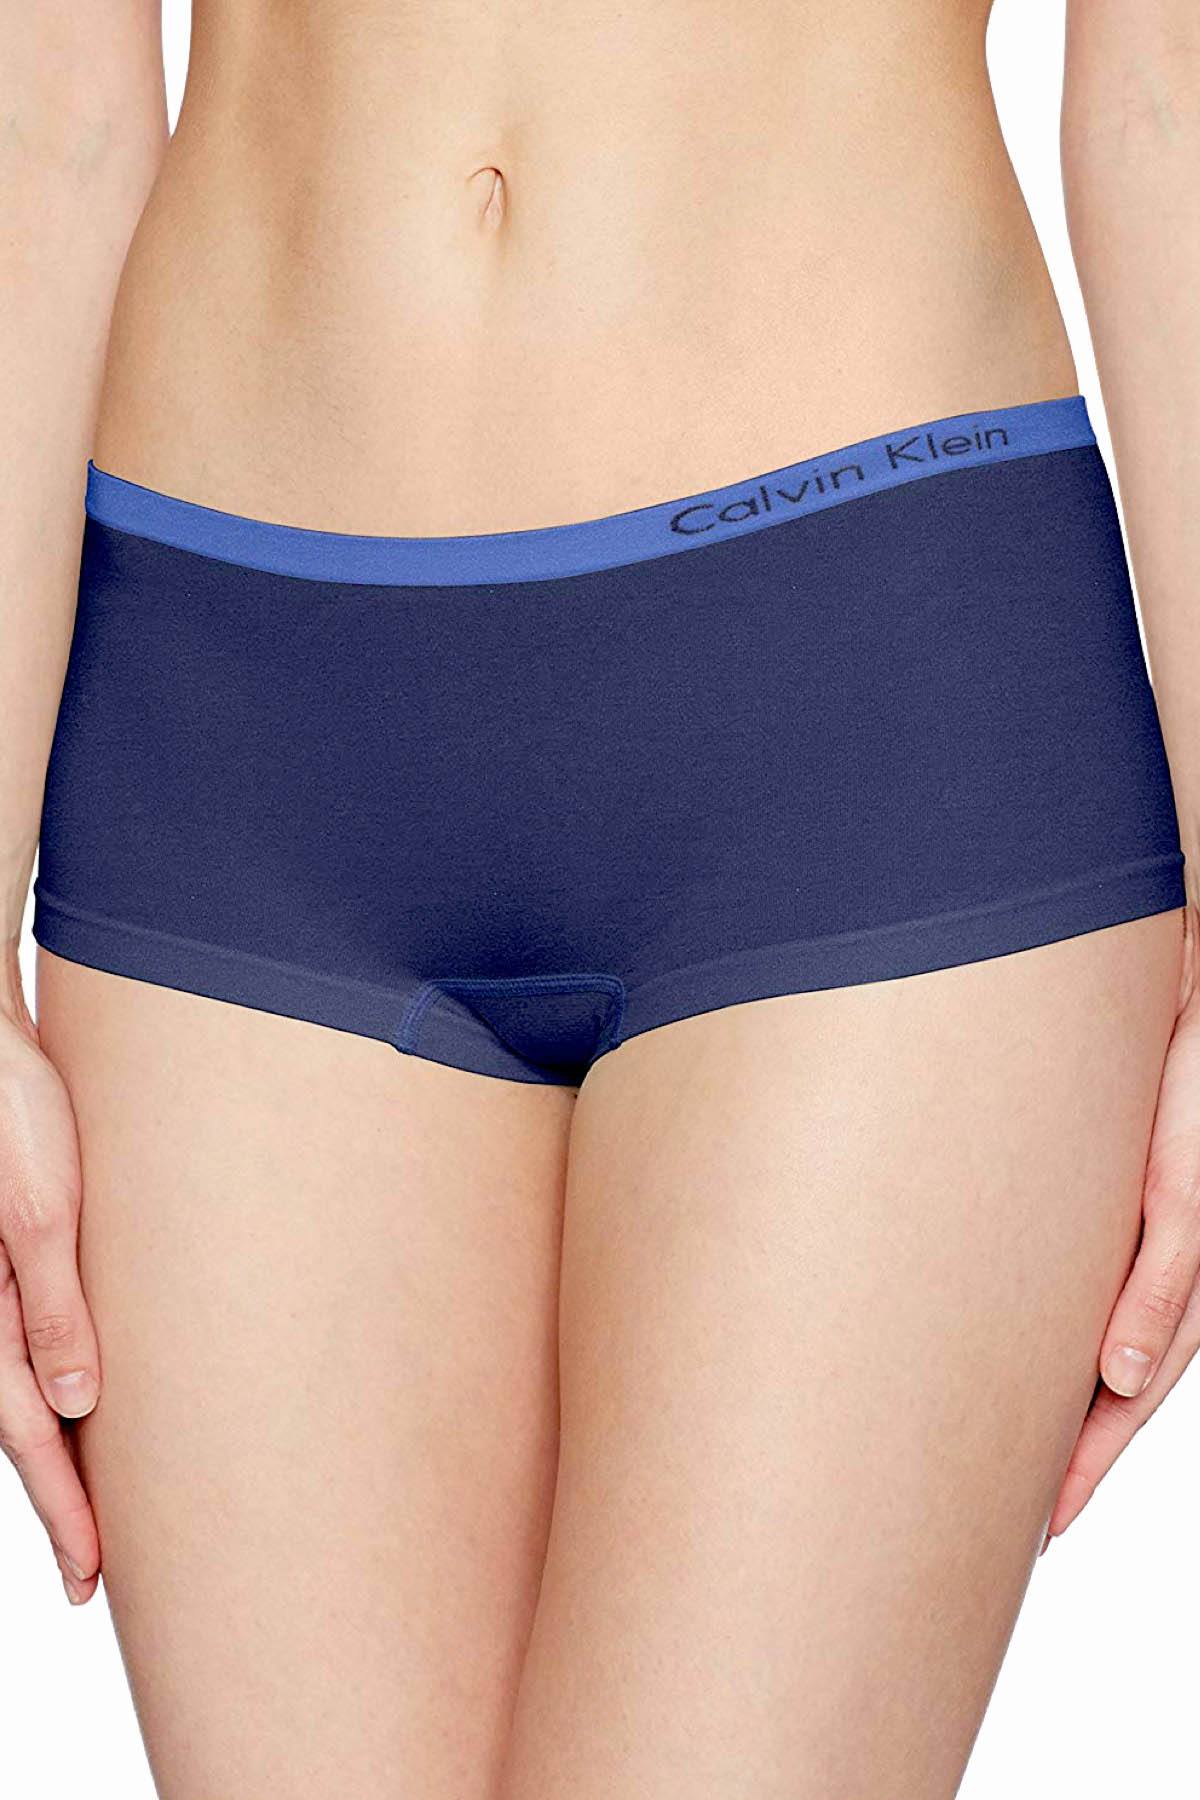 Calvin Klein Shoreline Blue Pure Seamless Thong Panties Underwear QD3544-476